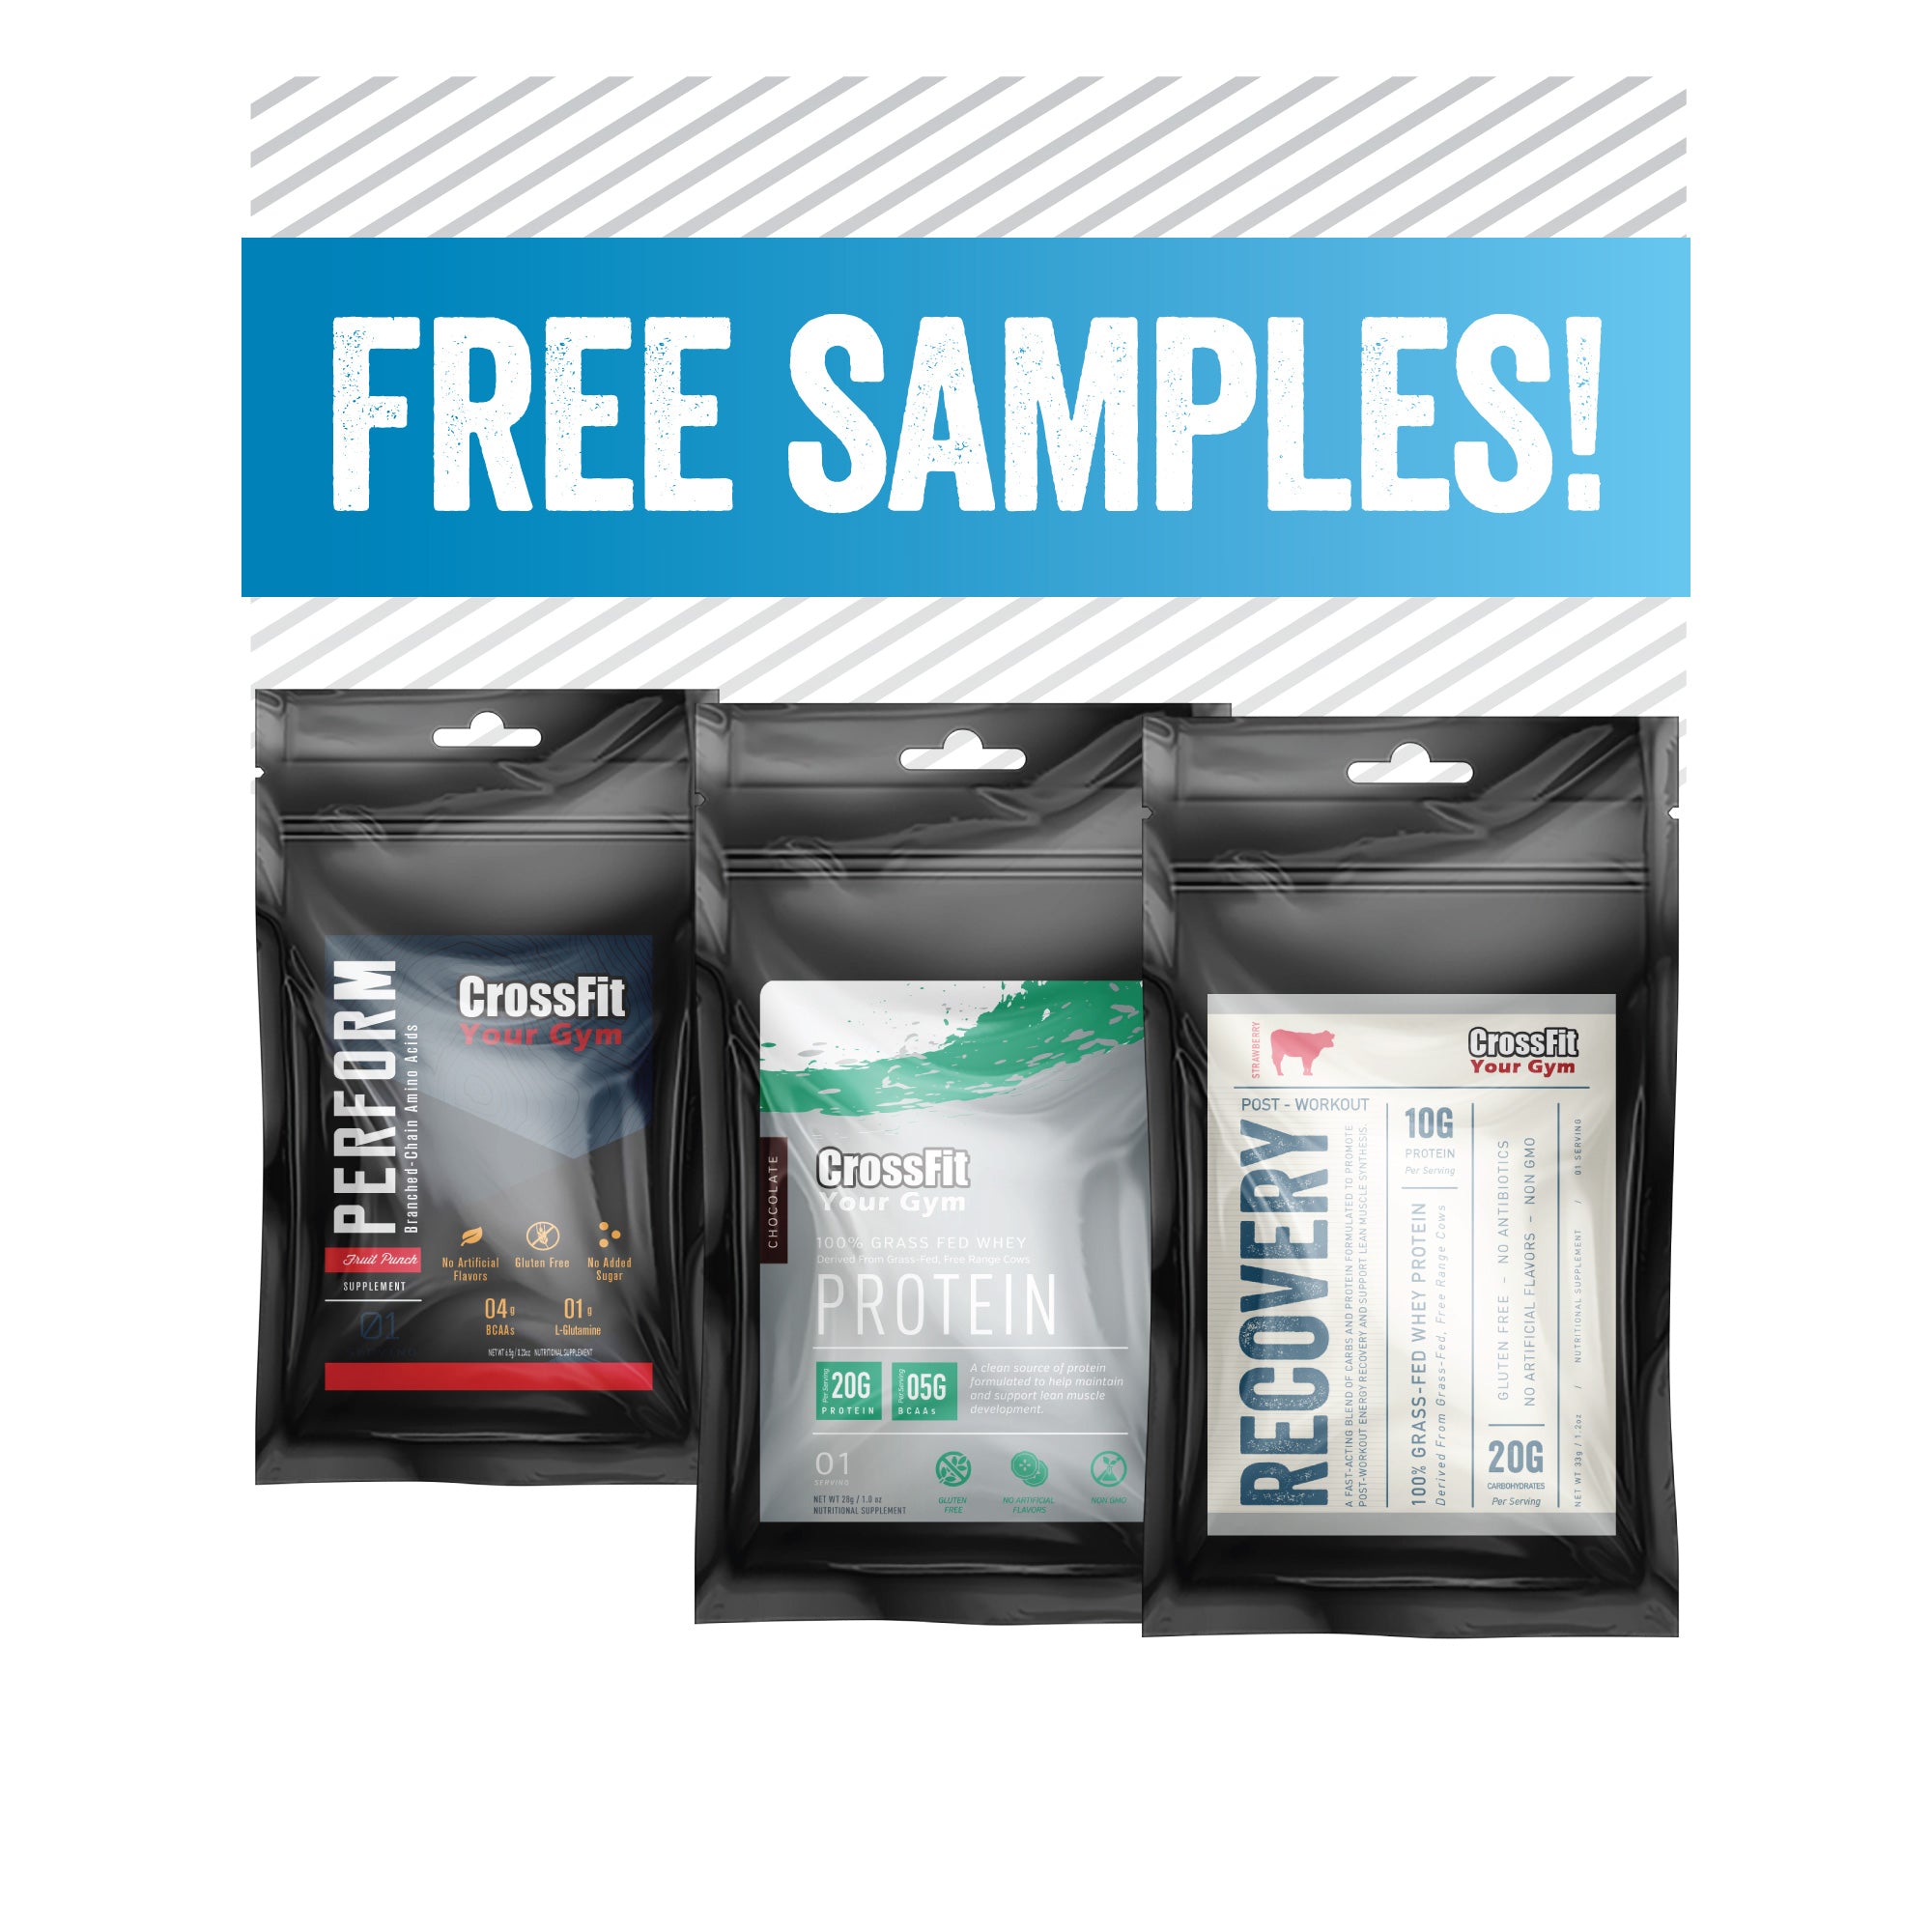 Supplement free samples online